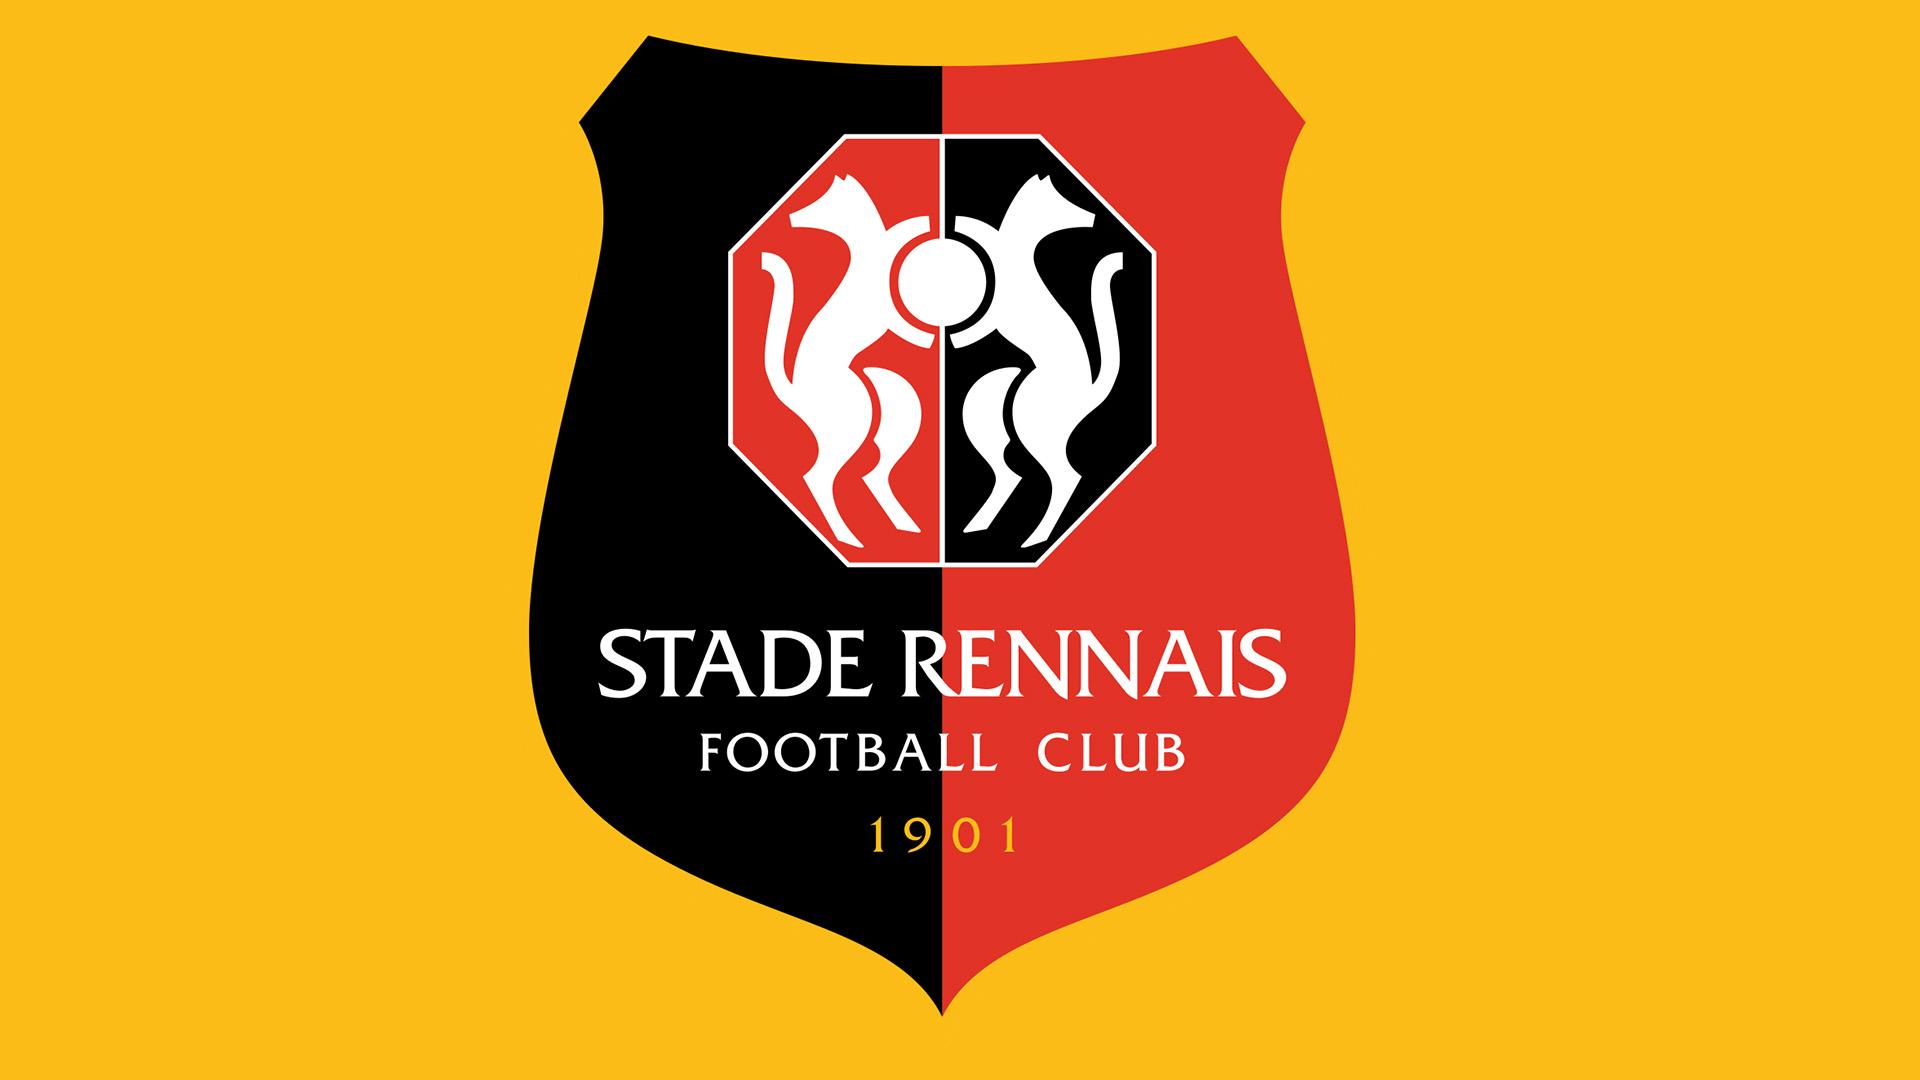 Stade Rennes logo histoire et signification, evolution, symbole